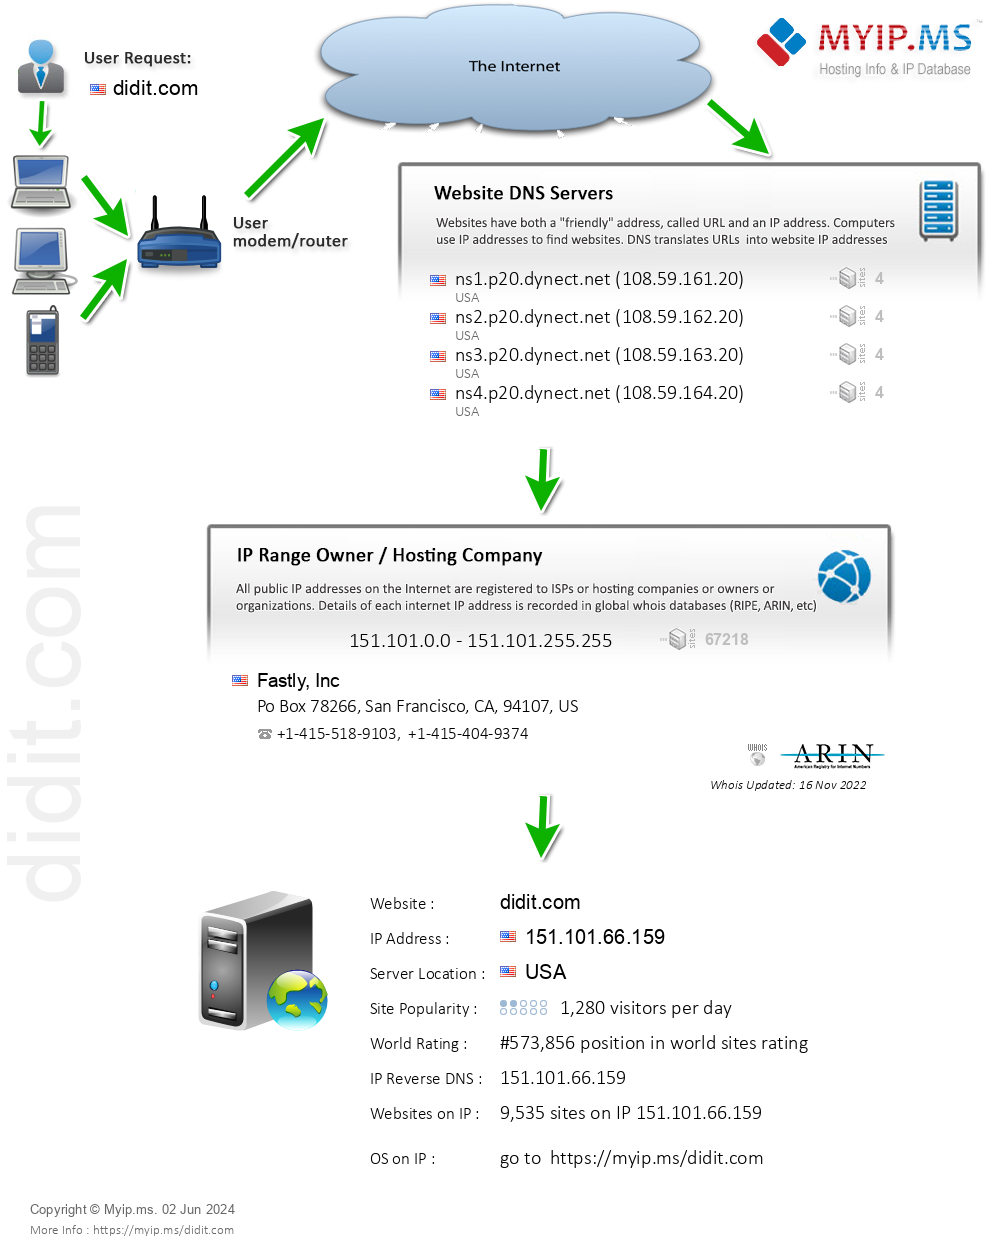 Didit.com - Website Hosting Visual IP Diagram